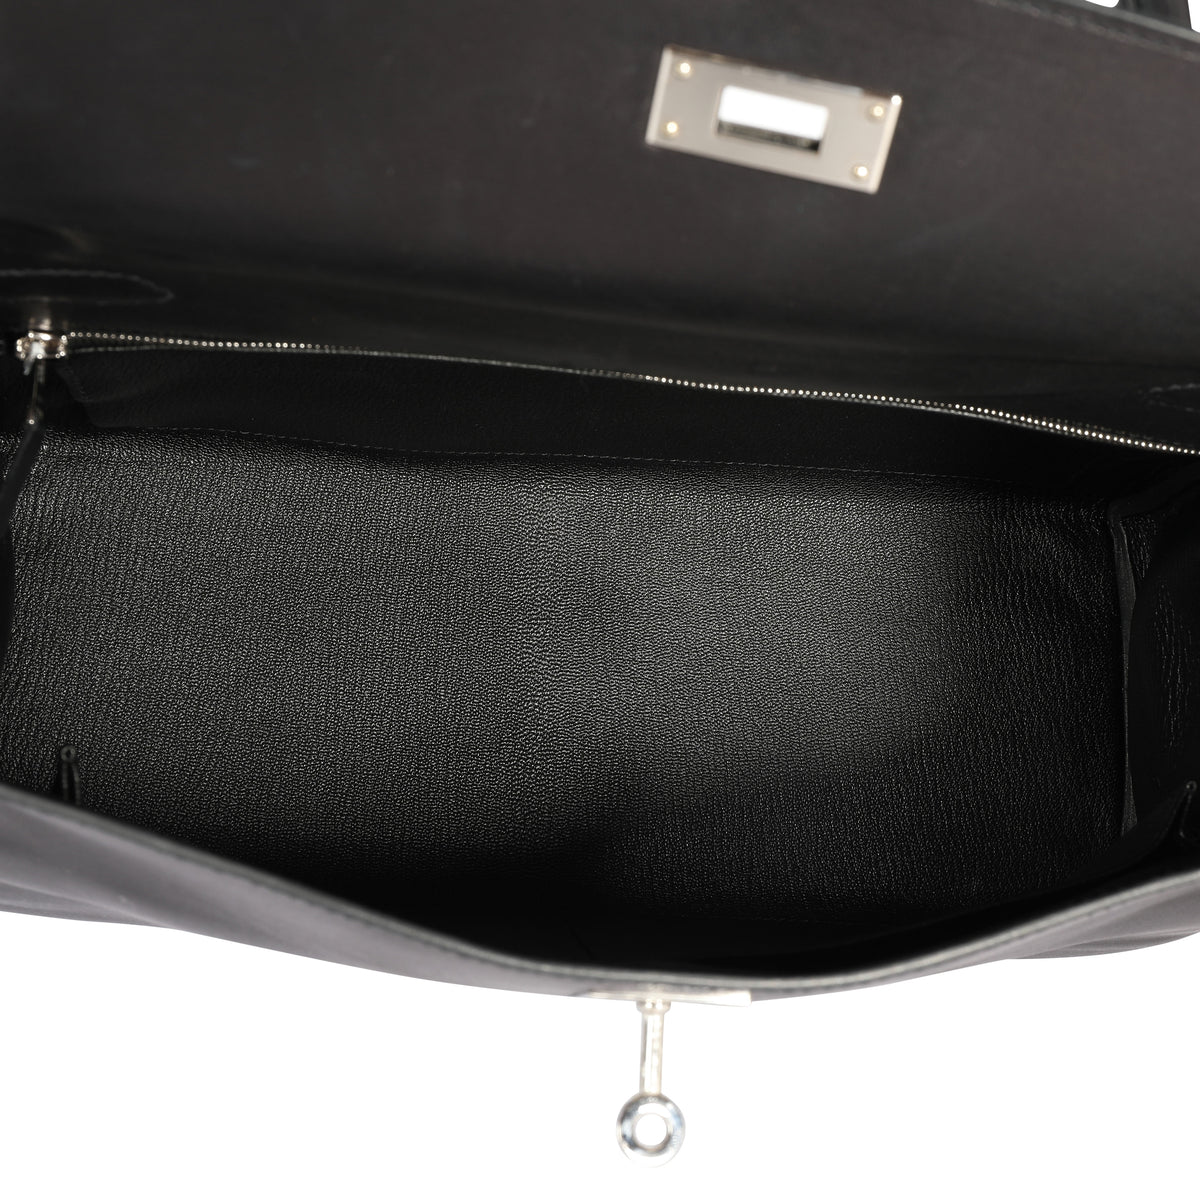 Hermès Black Swift Leather Retourne Kelly 28 with Palladium Hardware